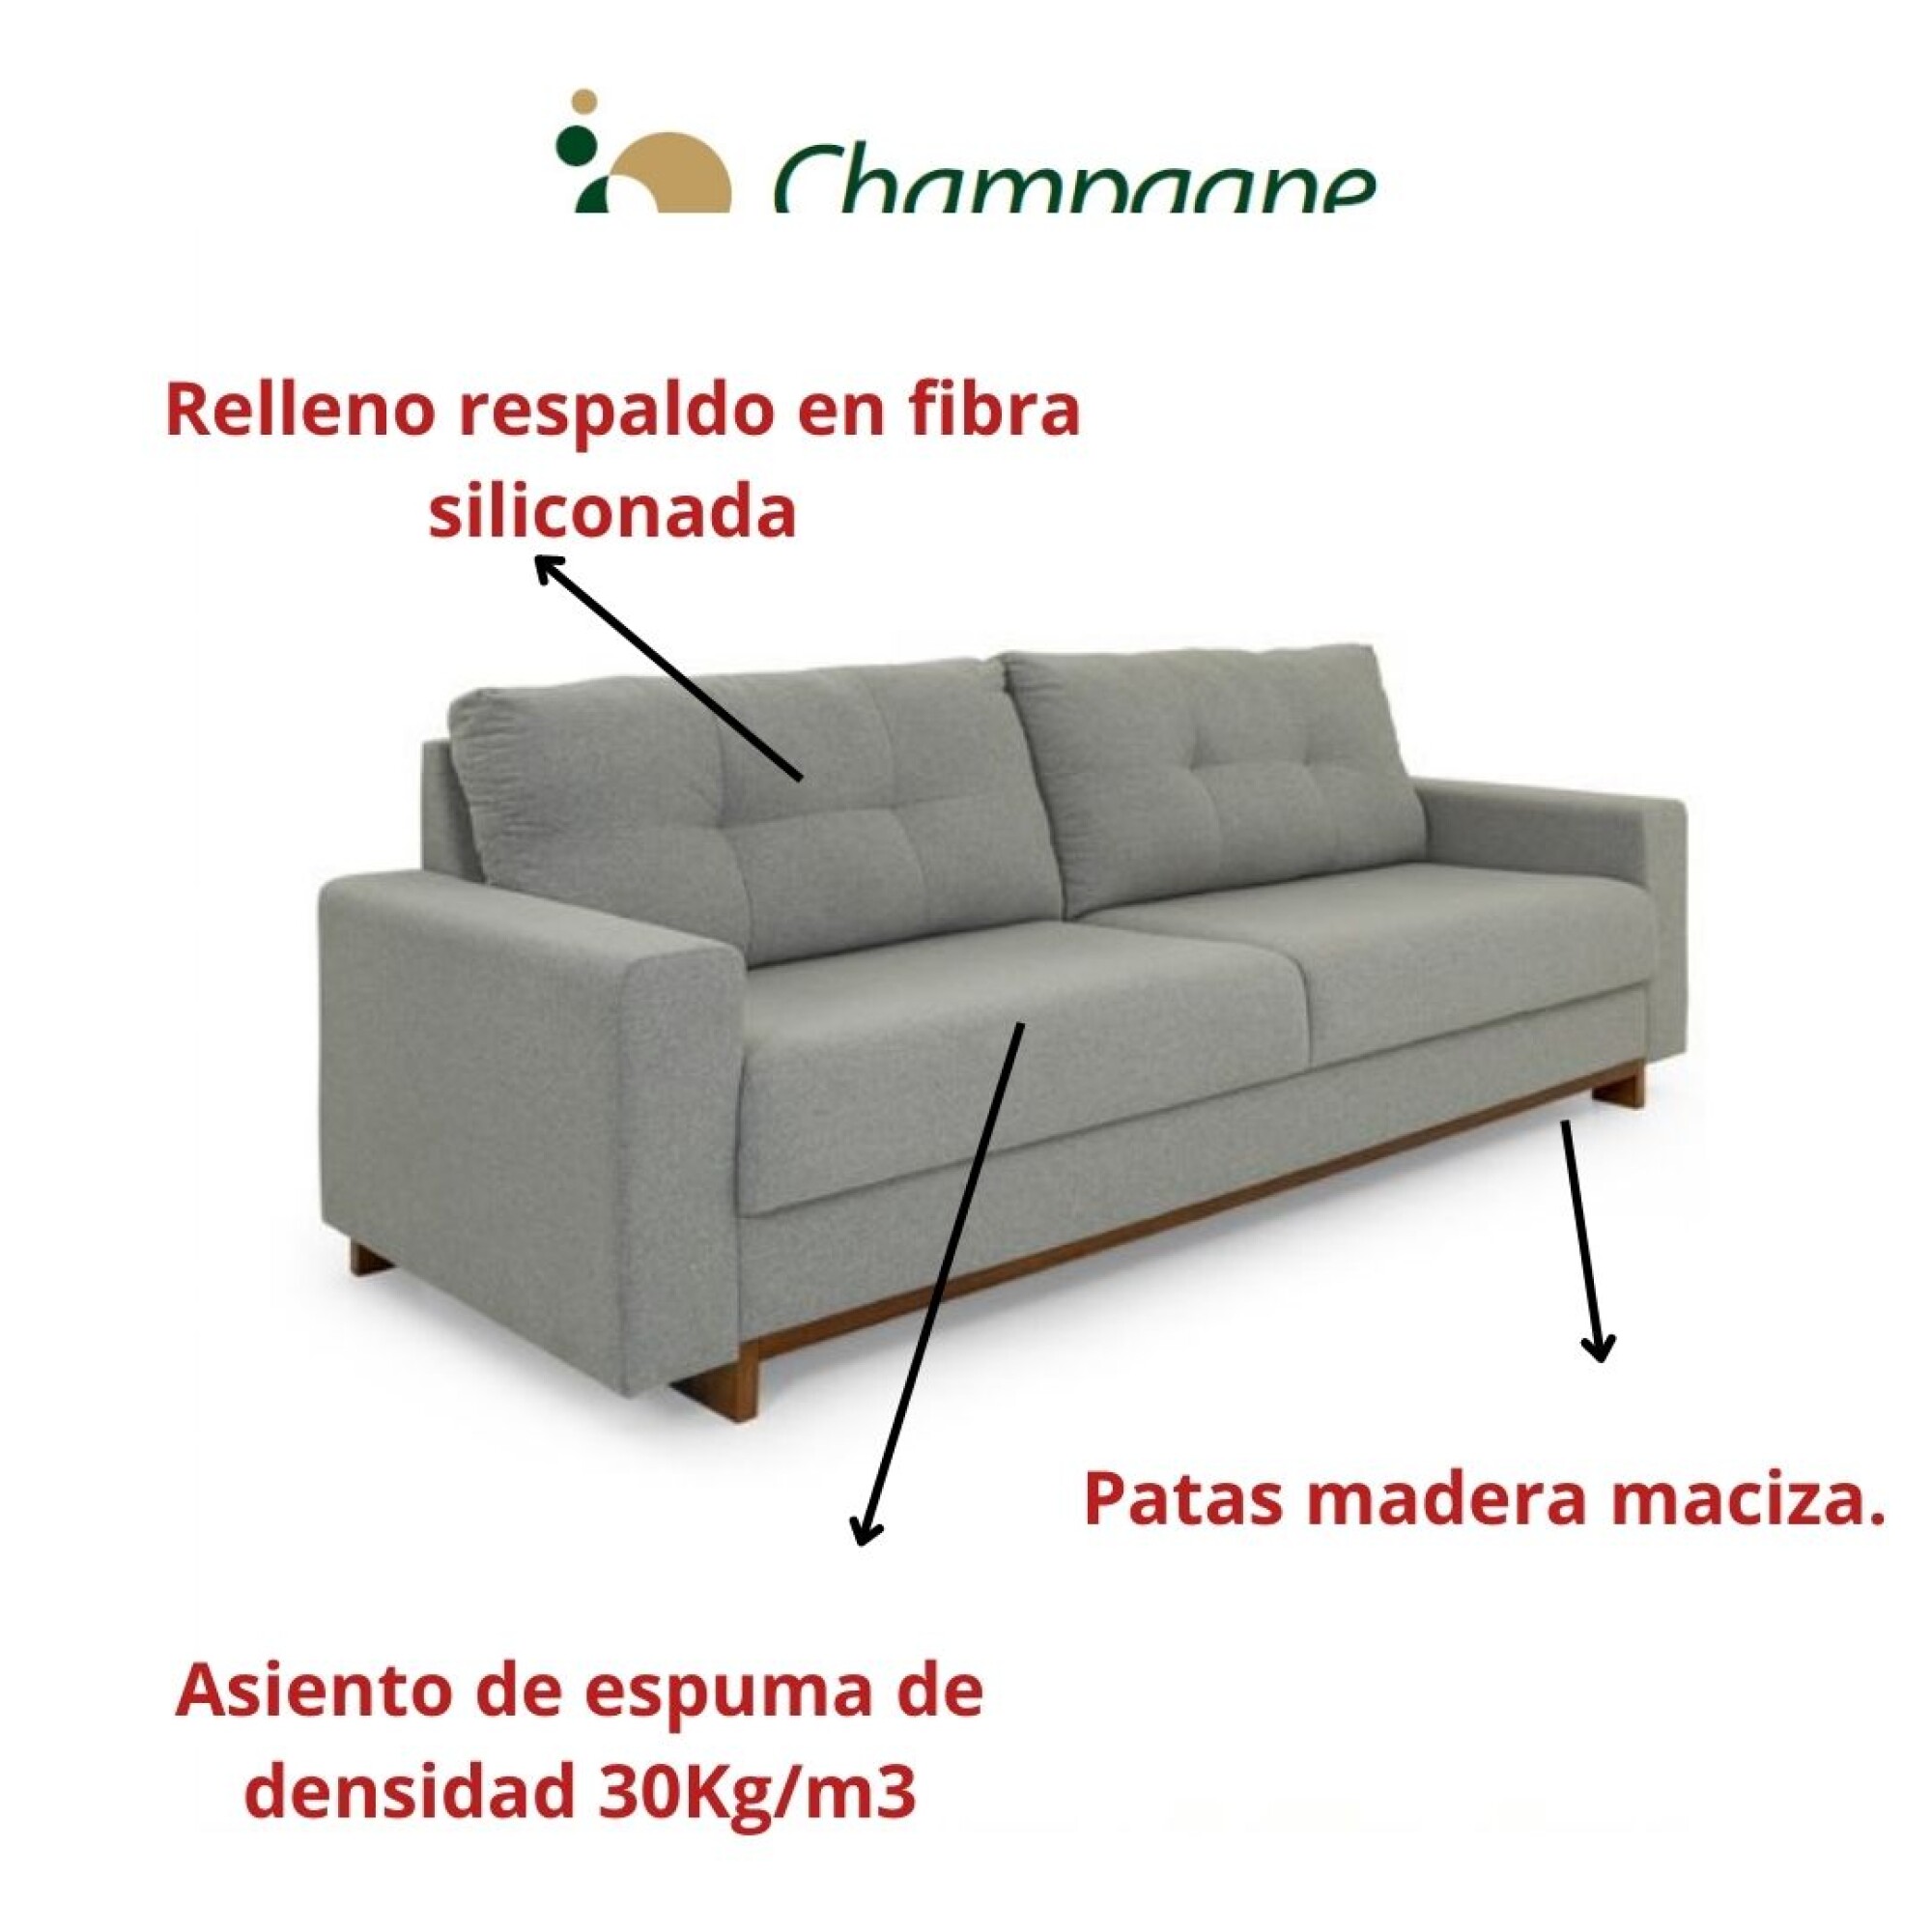 Sofa 3 cuerpos - Respaldo capitoneado - Tapizado tela tipo arpillera —  Champagne Home & Deco